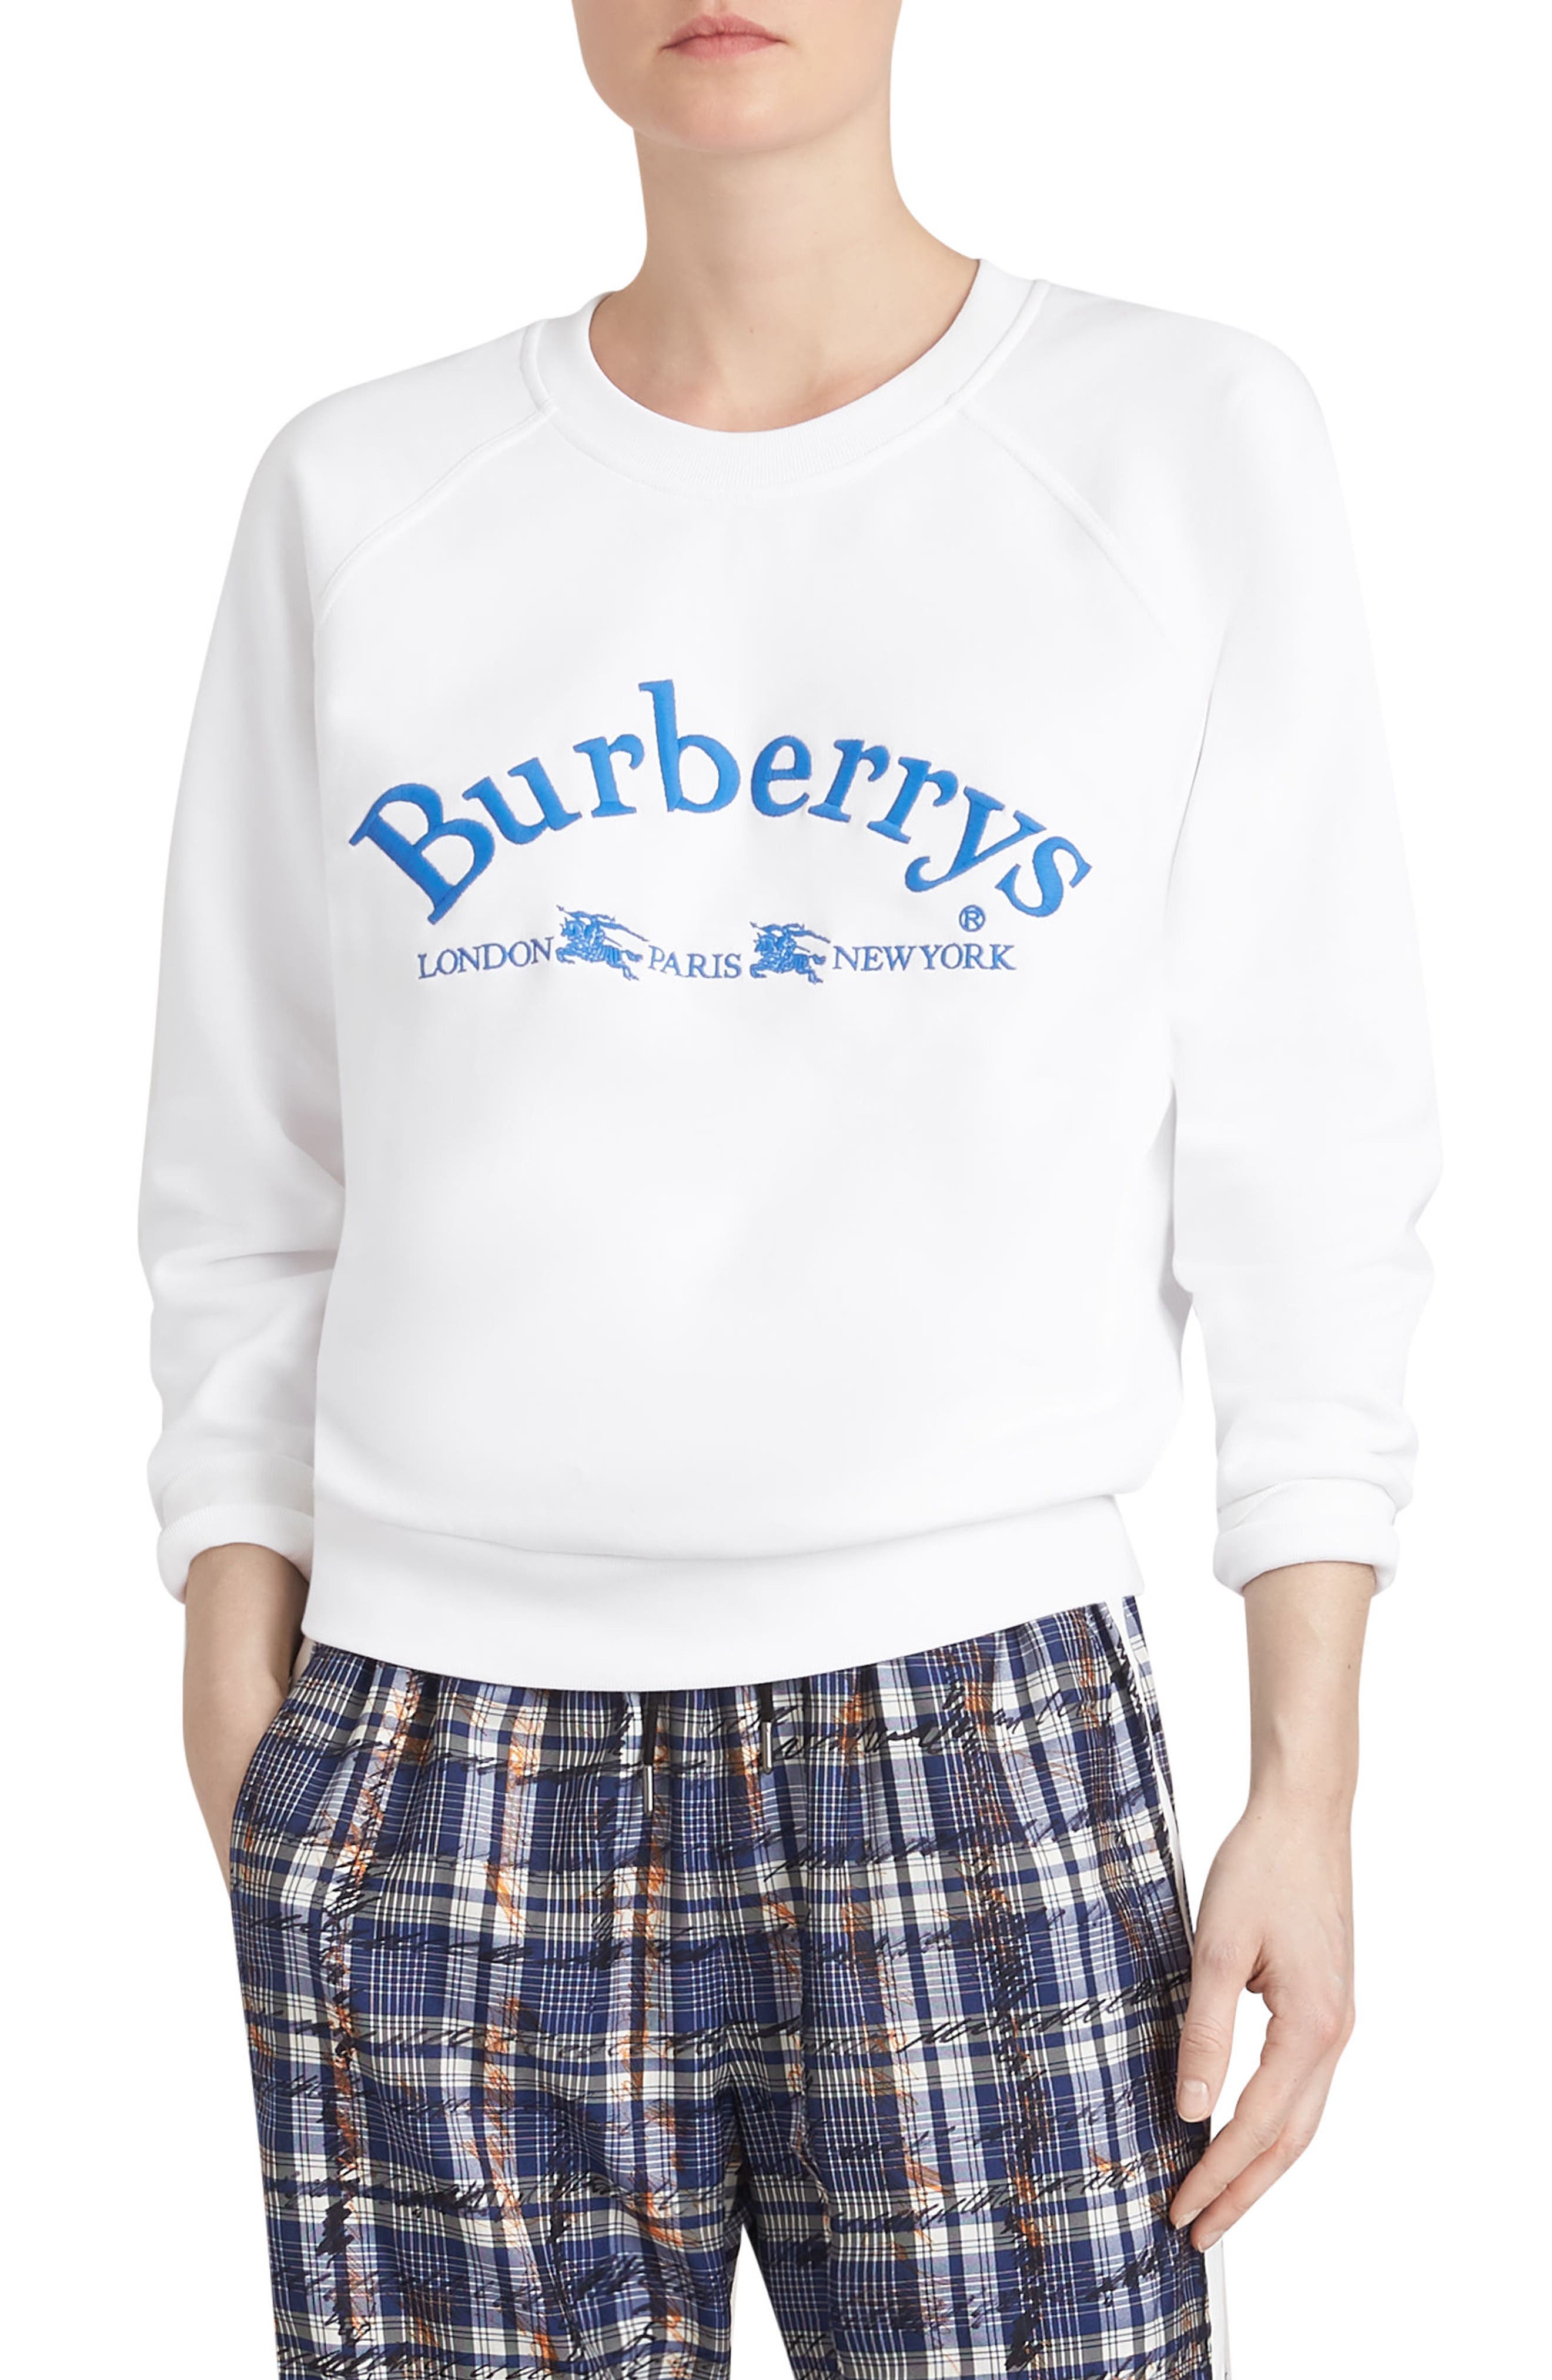 burberry battarni sweatshirt